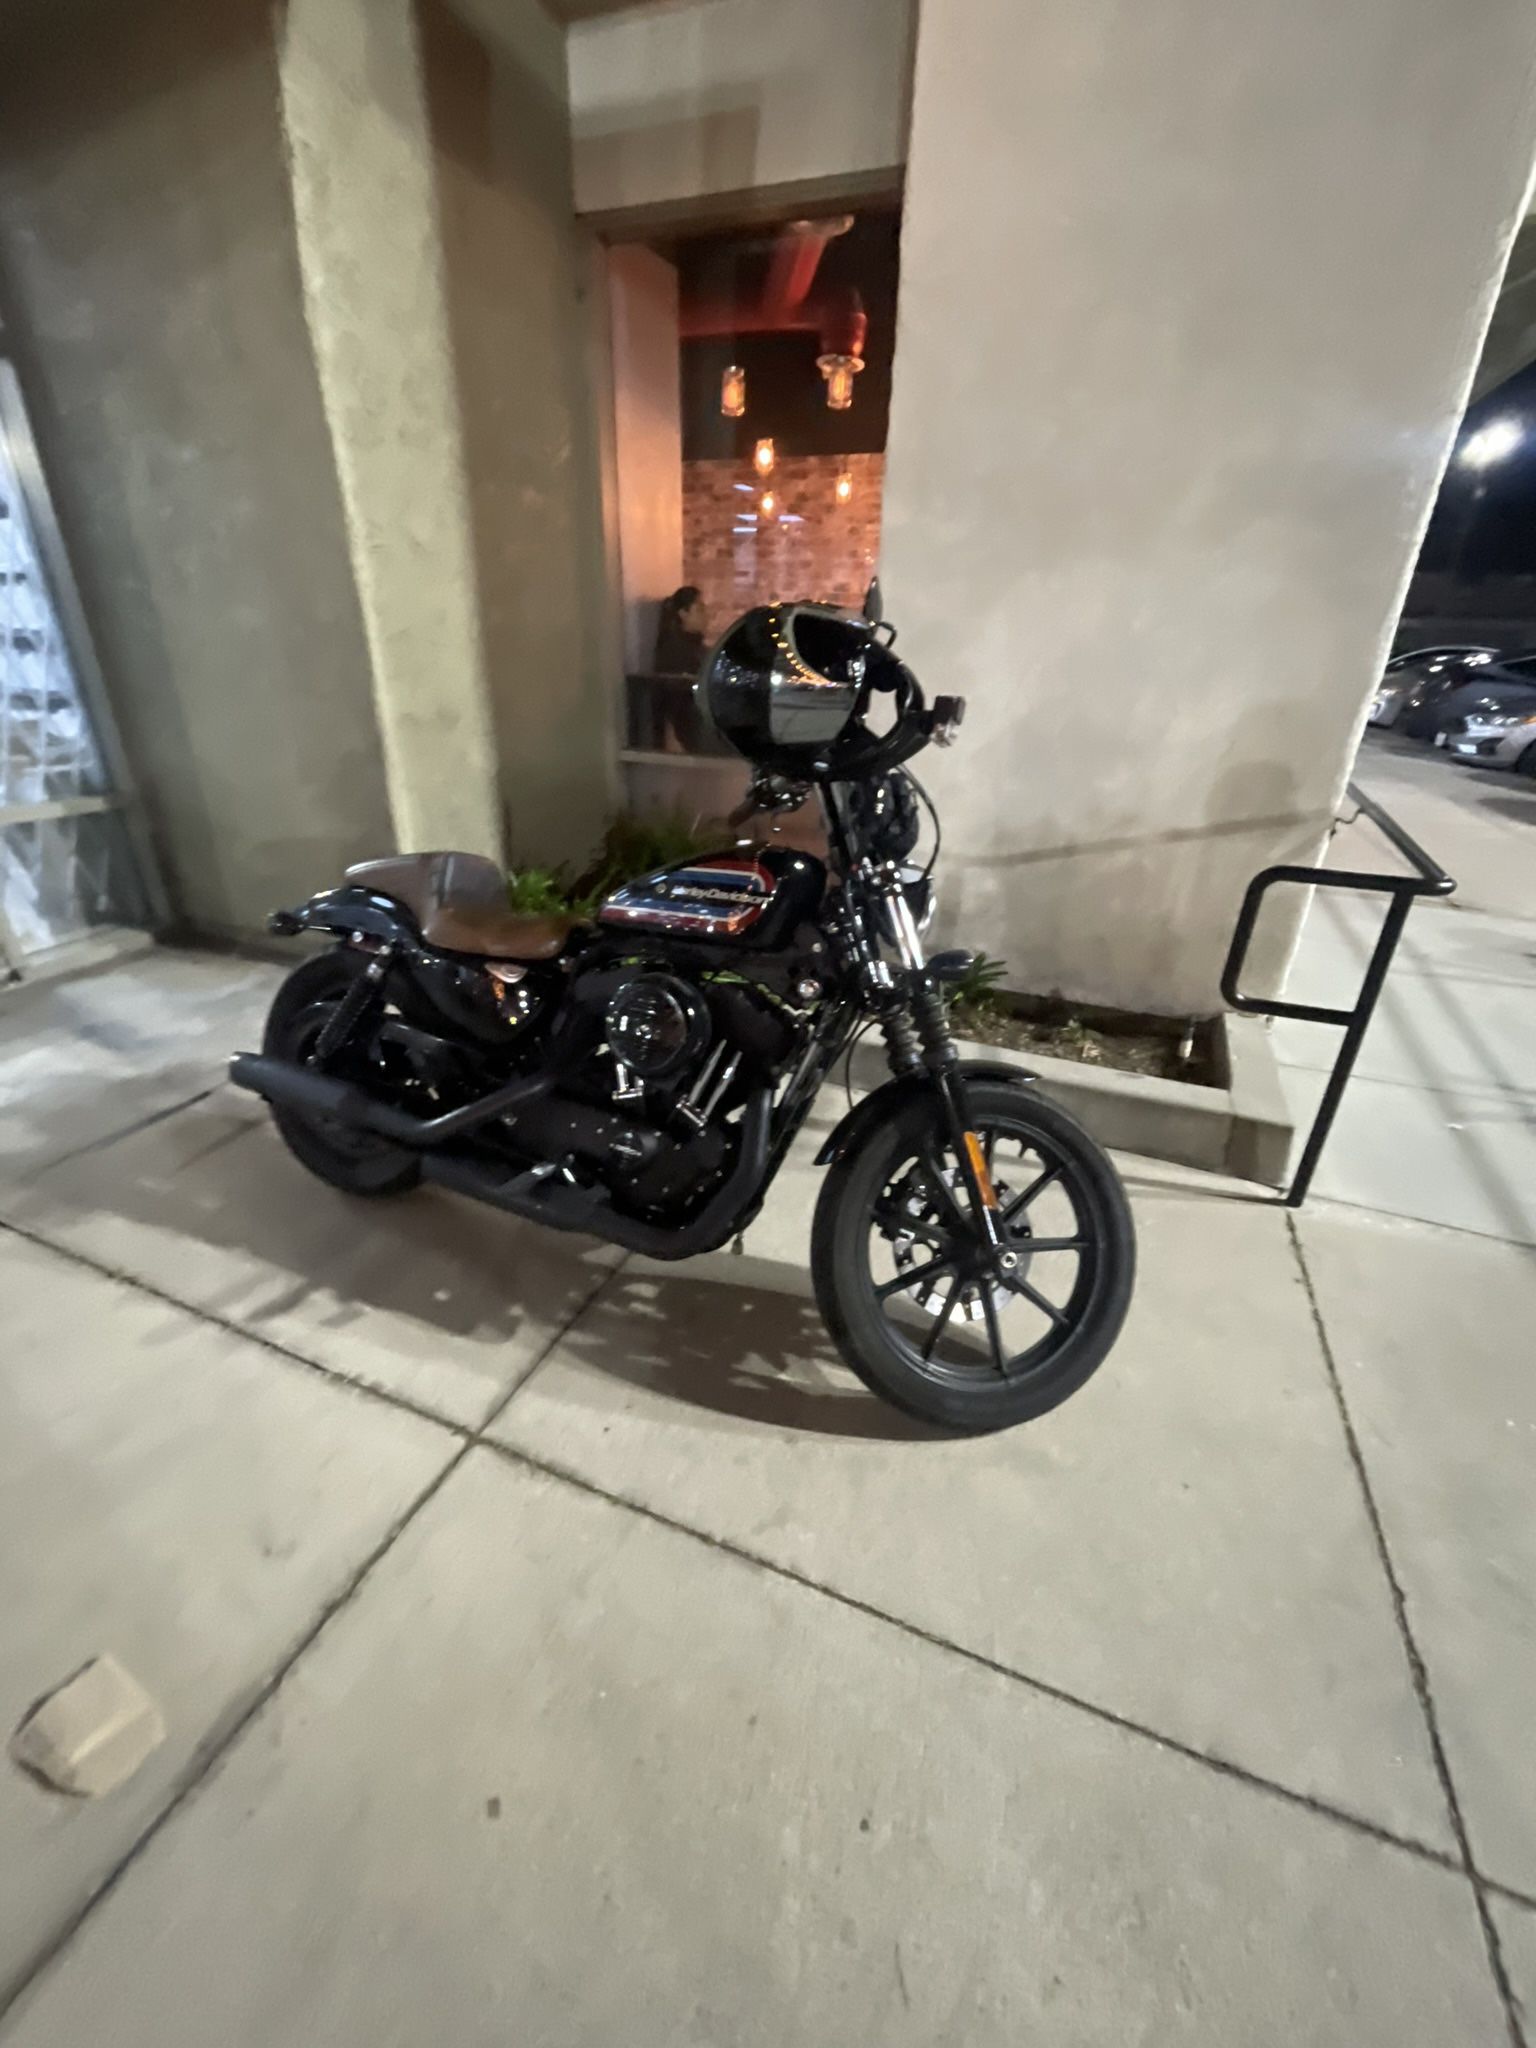 2020 Harley Davidson Sportster Iron 1200